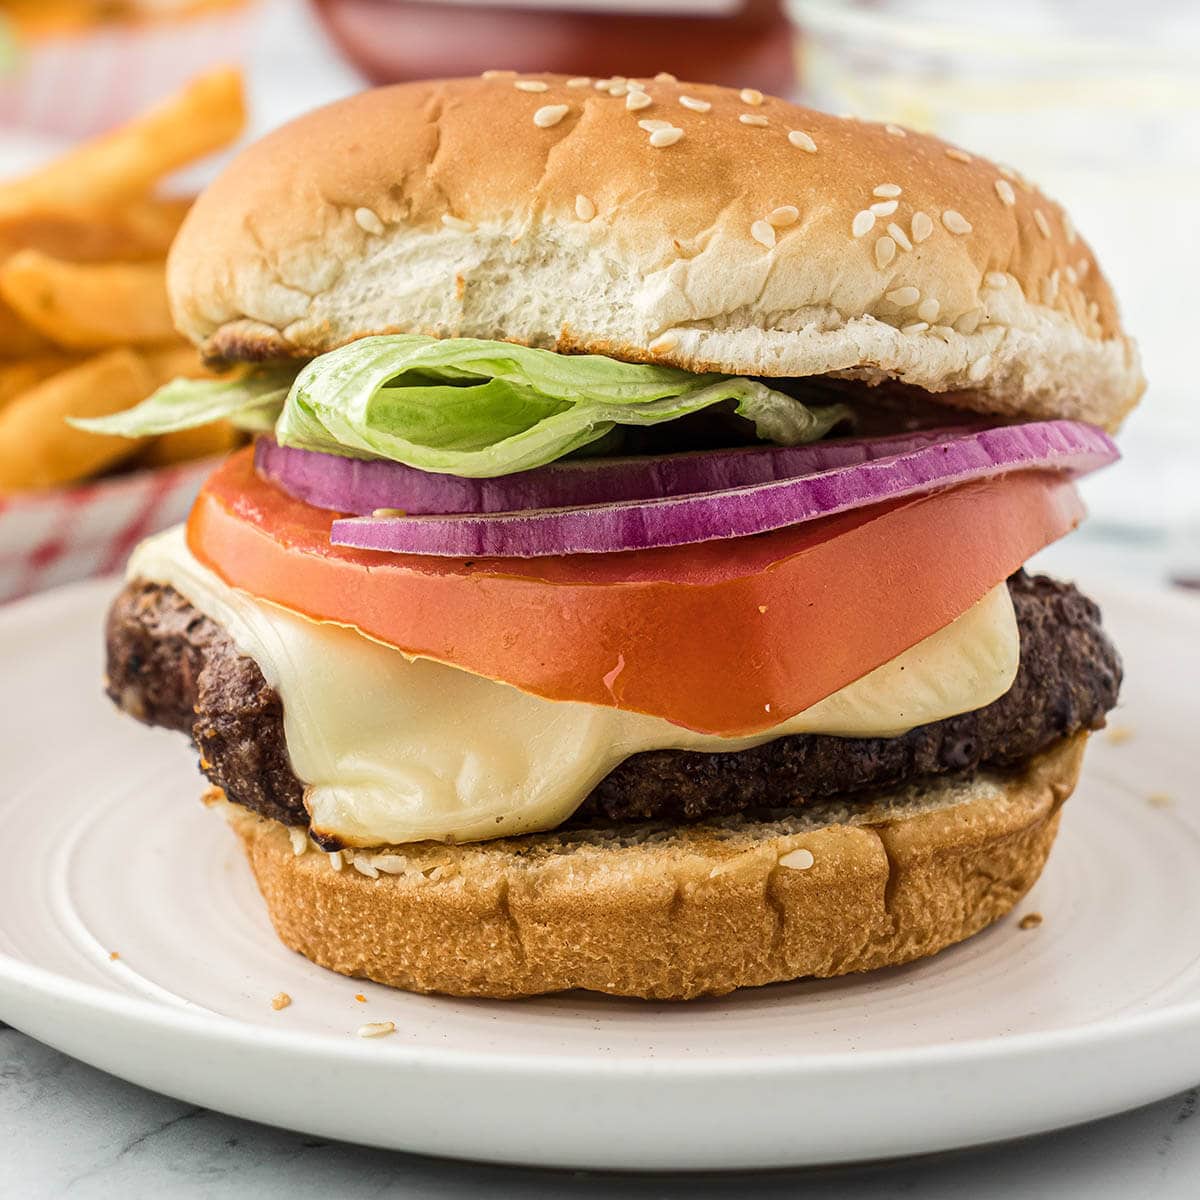 Homemade Smash Burgers - Hey Grill, Hey